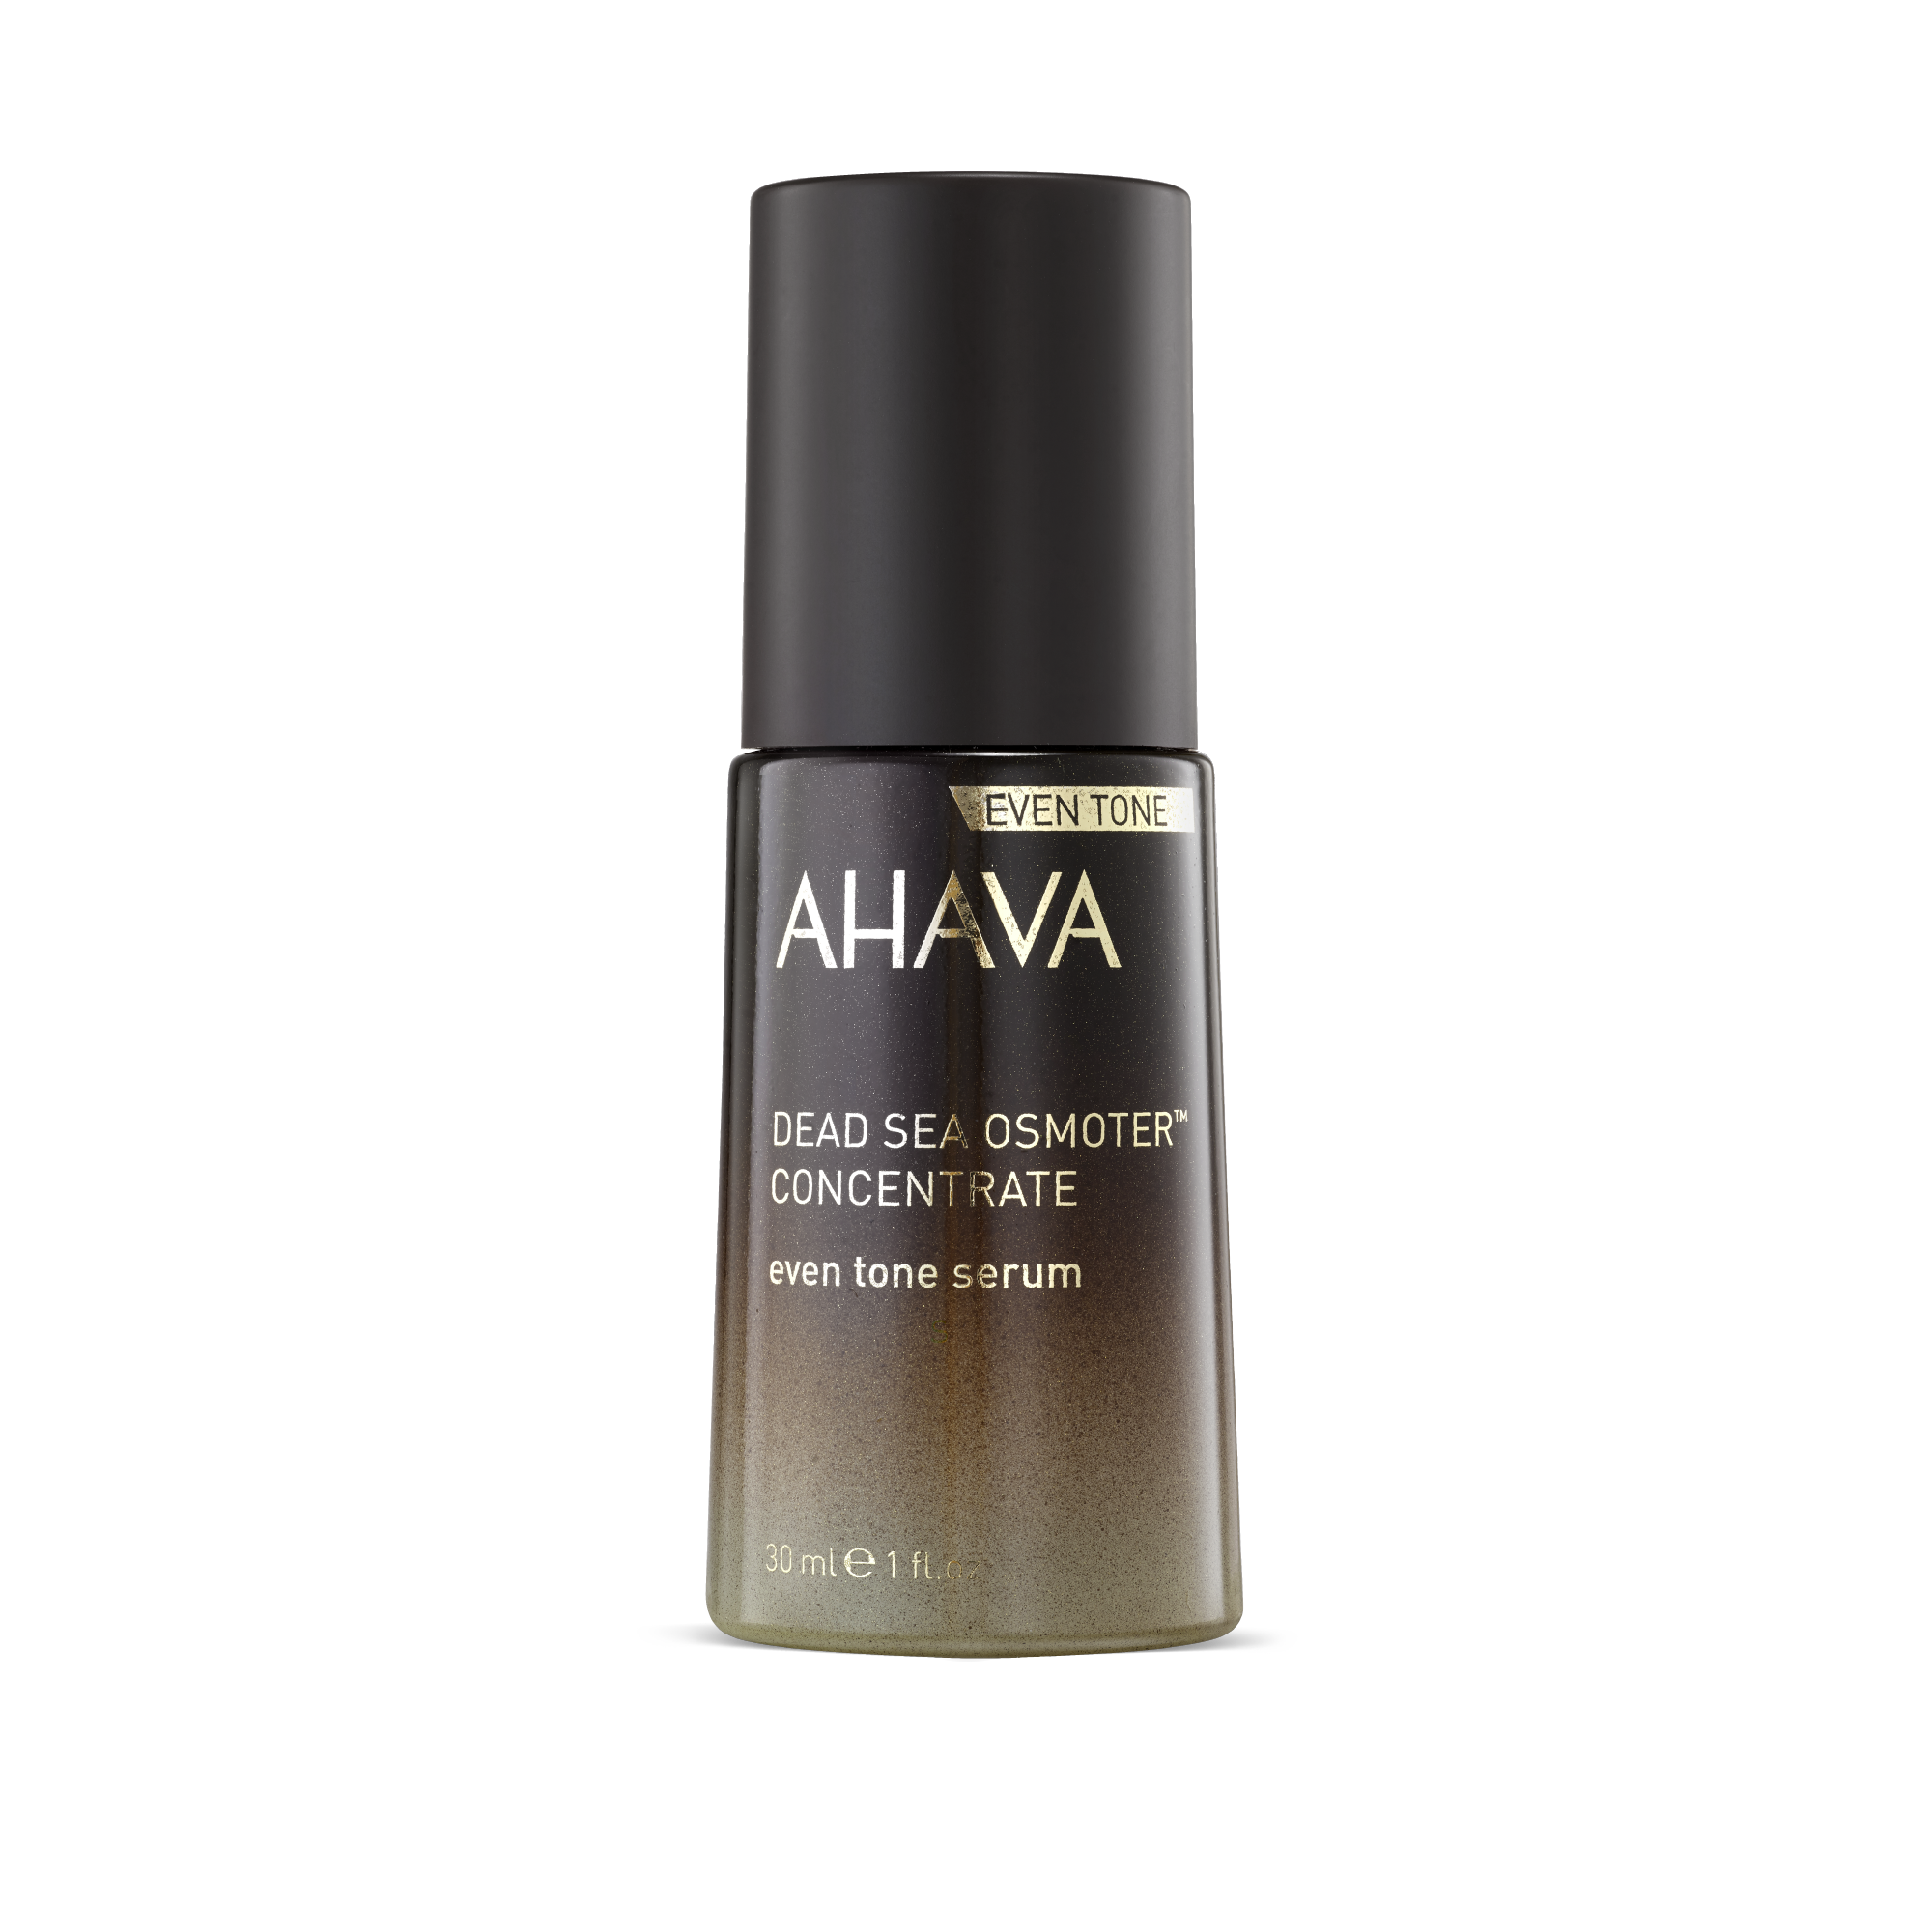 AHAVA® Dead Sea Osmoter Global – Serum AHAVA Tone Concentrate Even